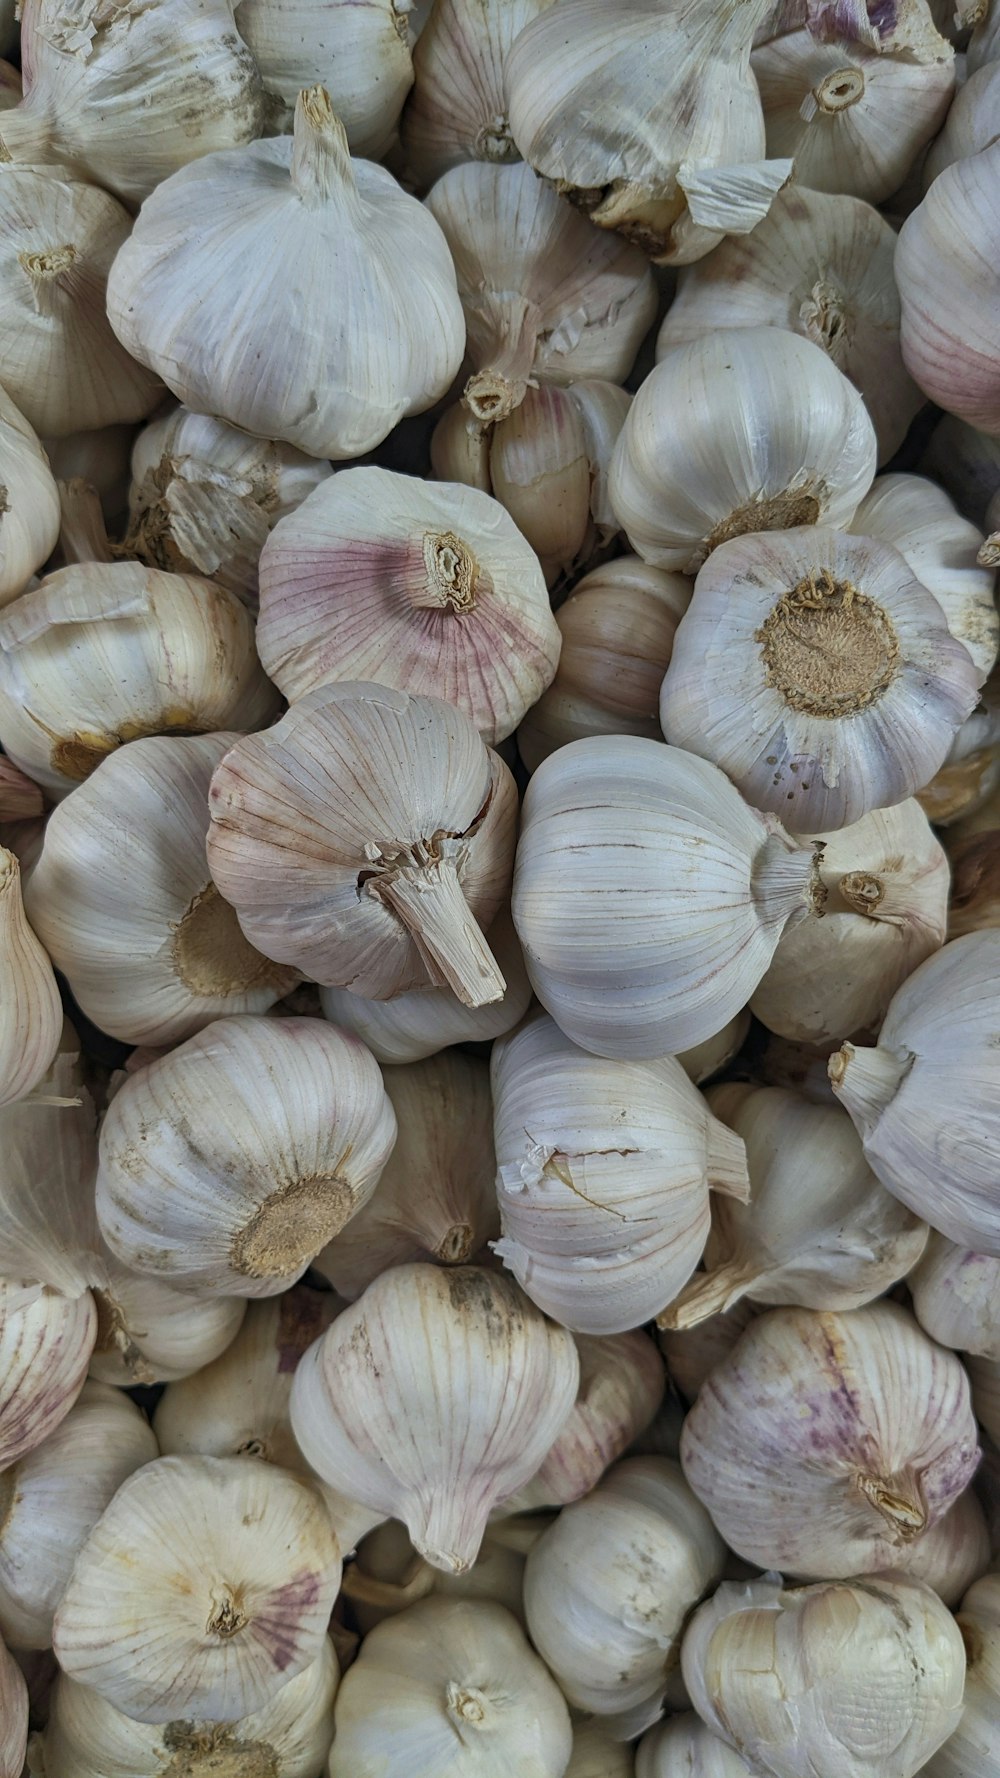 garlic lot on black surface